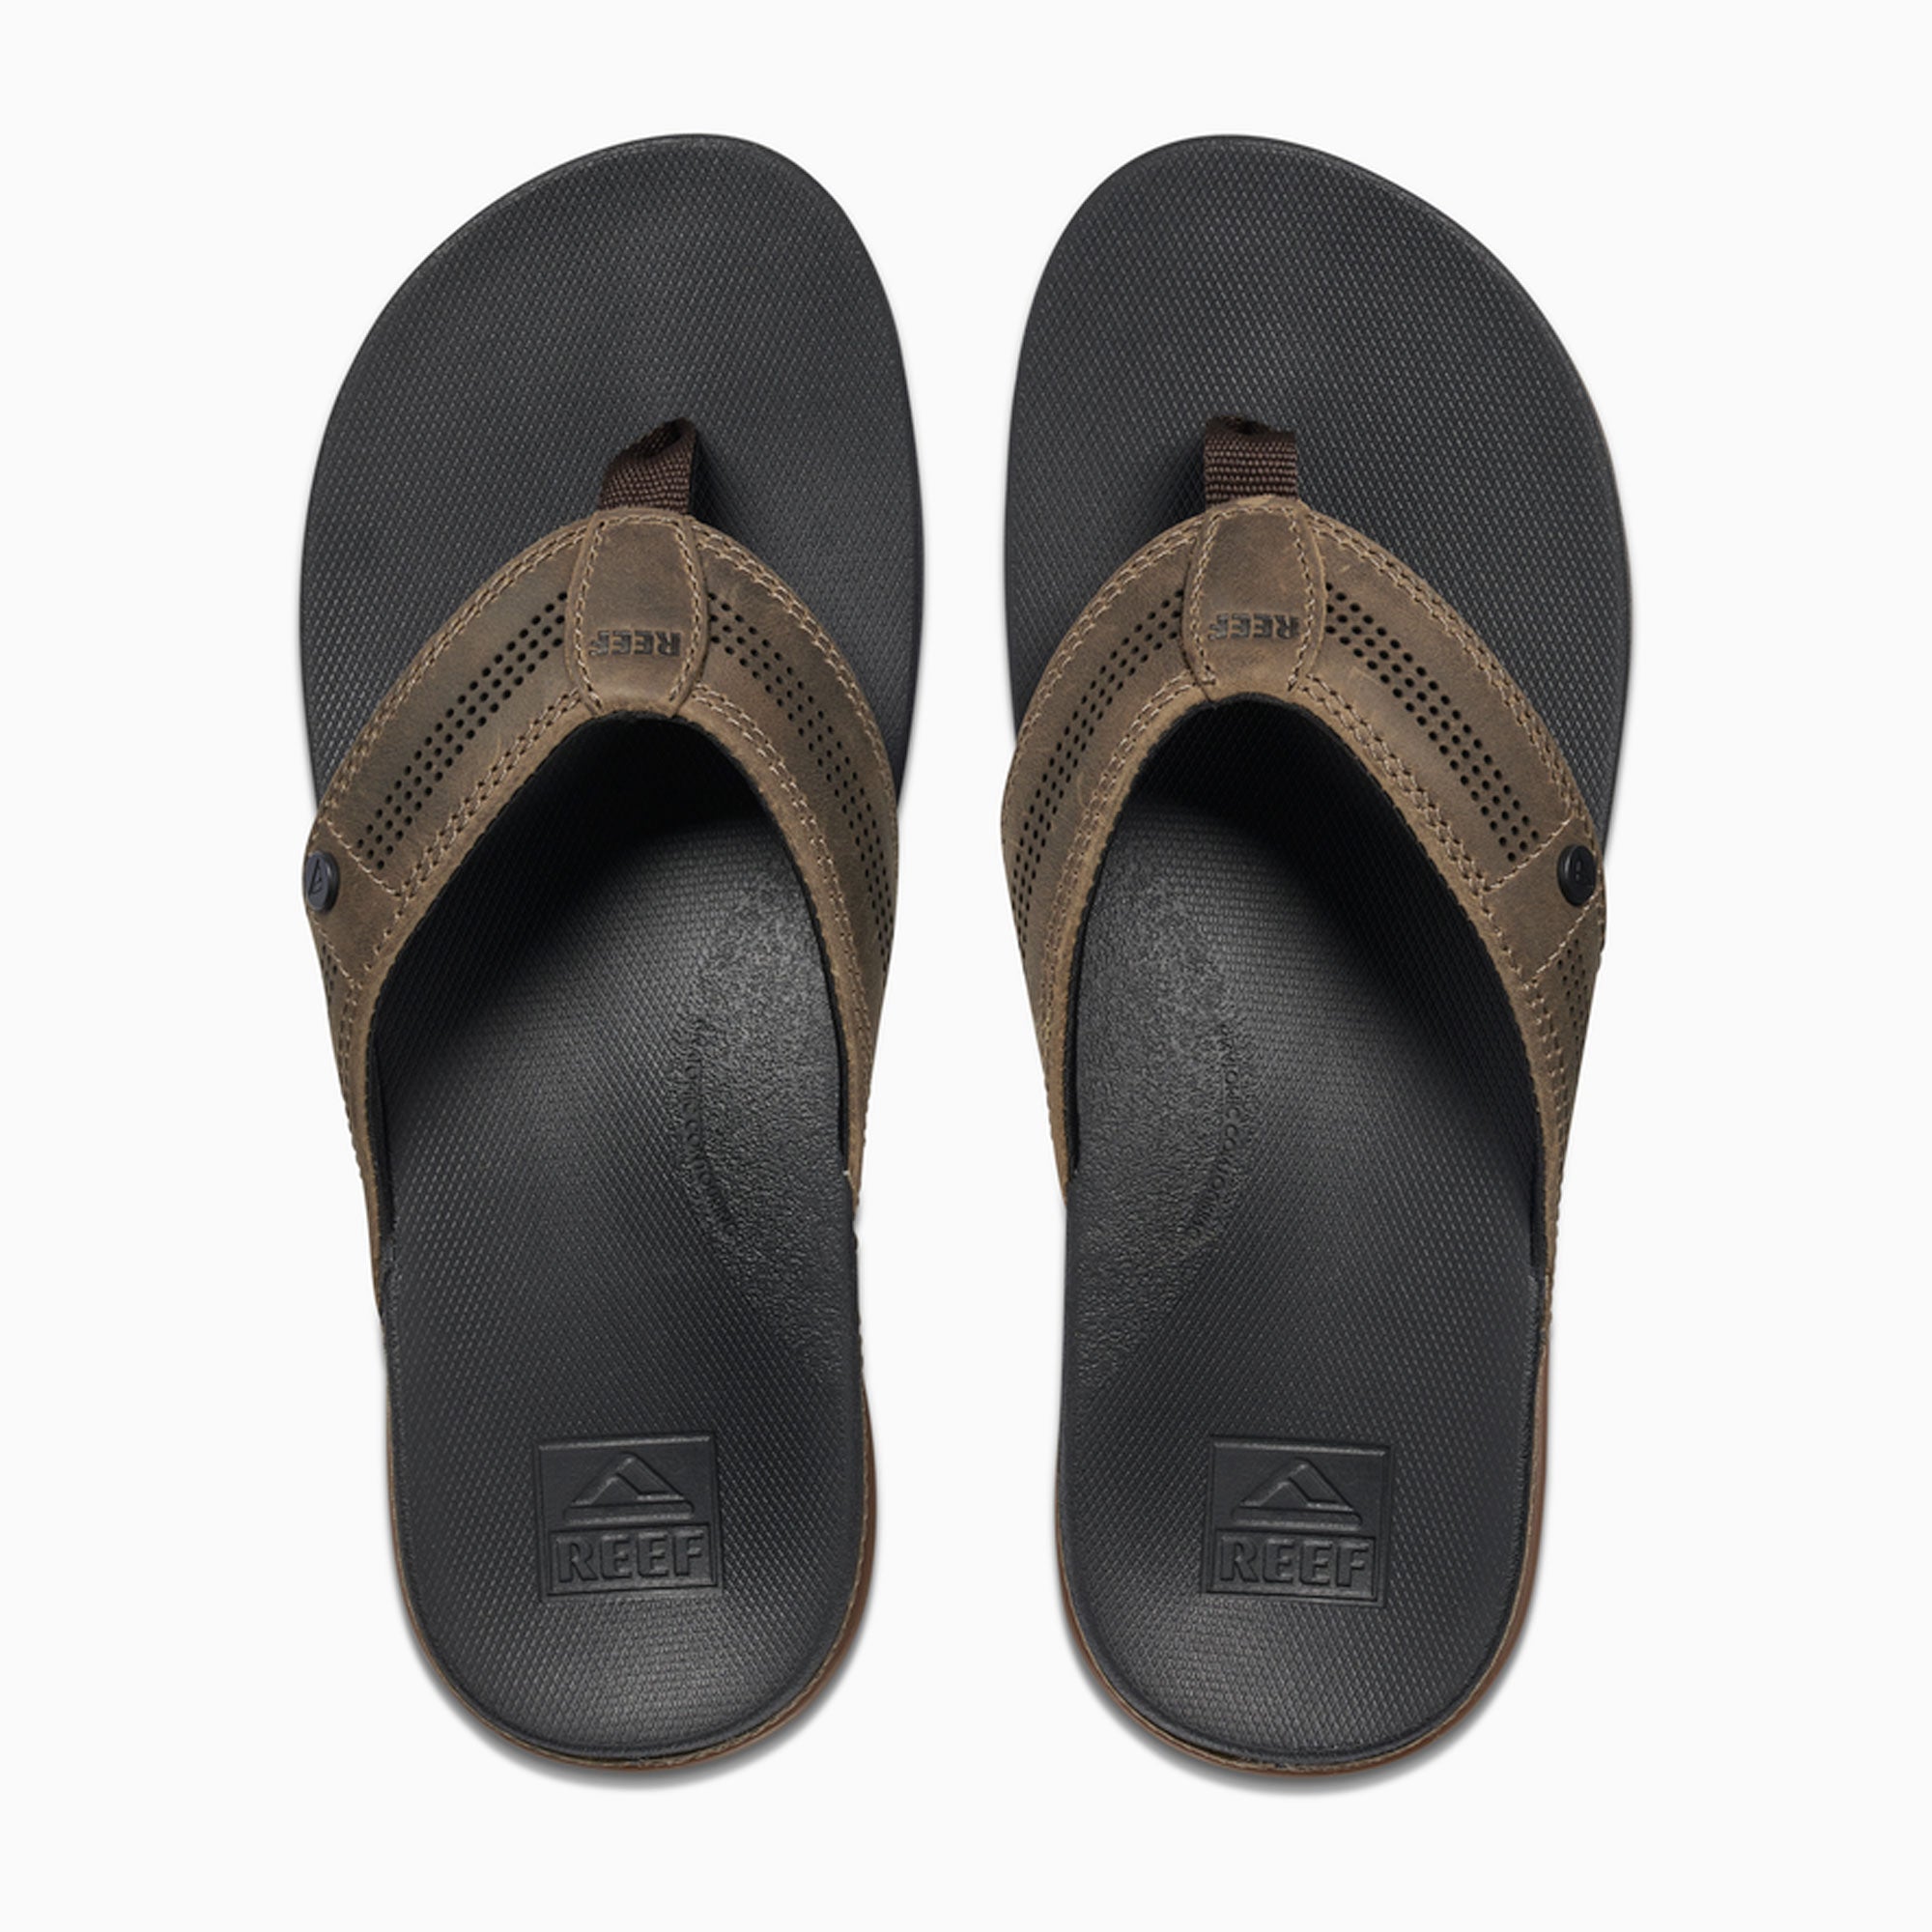 Reef Cushion Lux Men's Sandals - Tan/Black